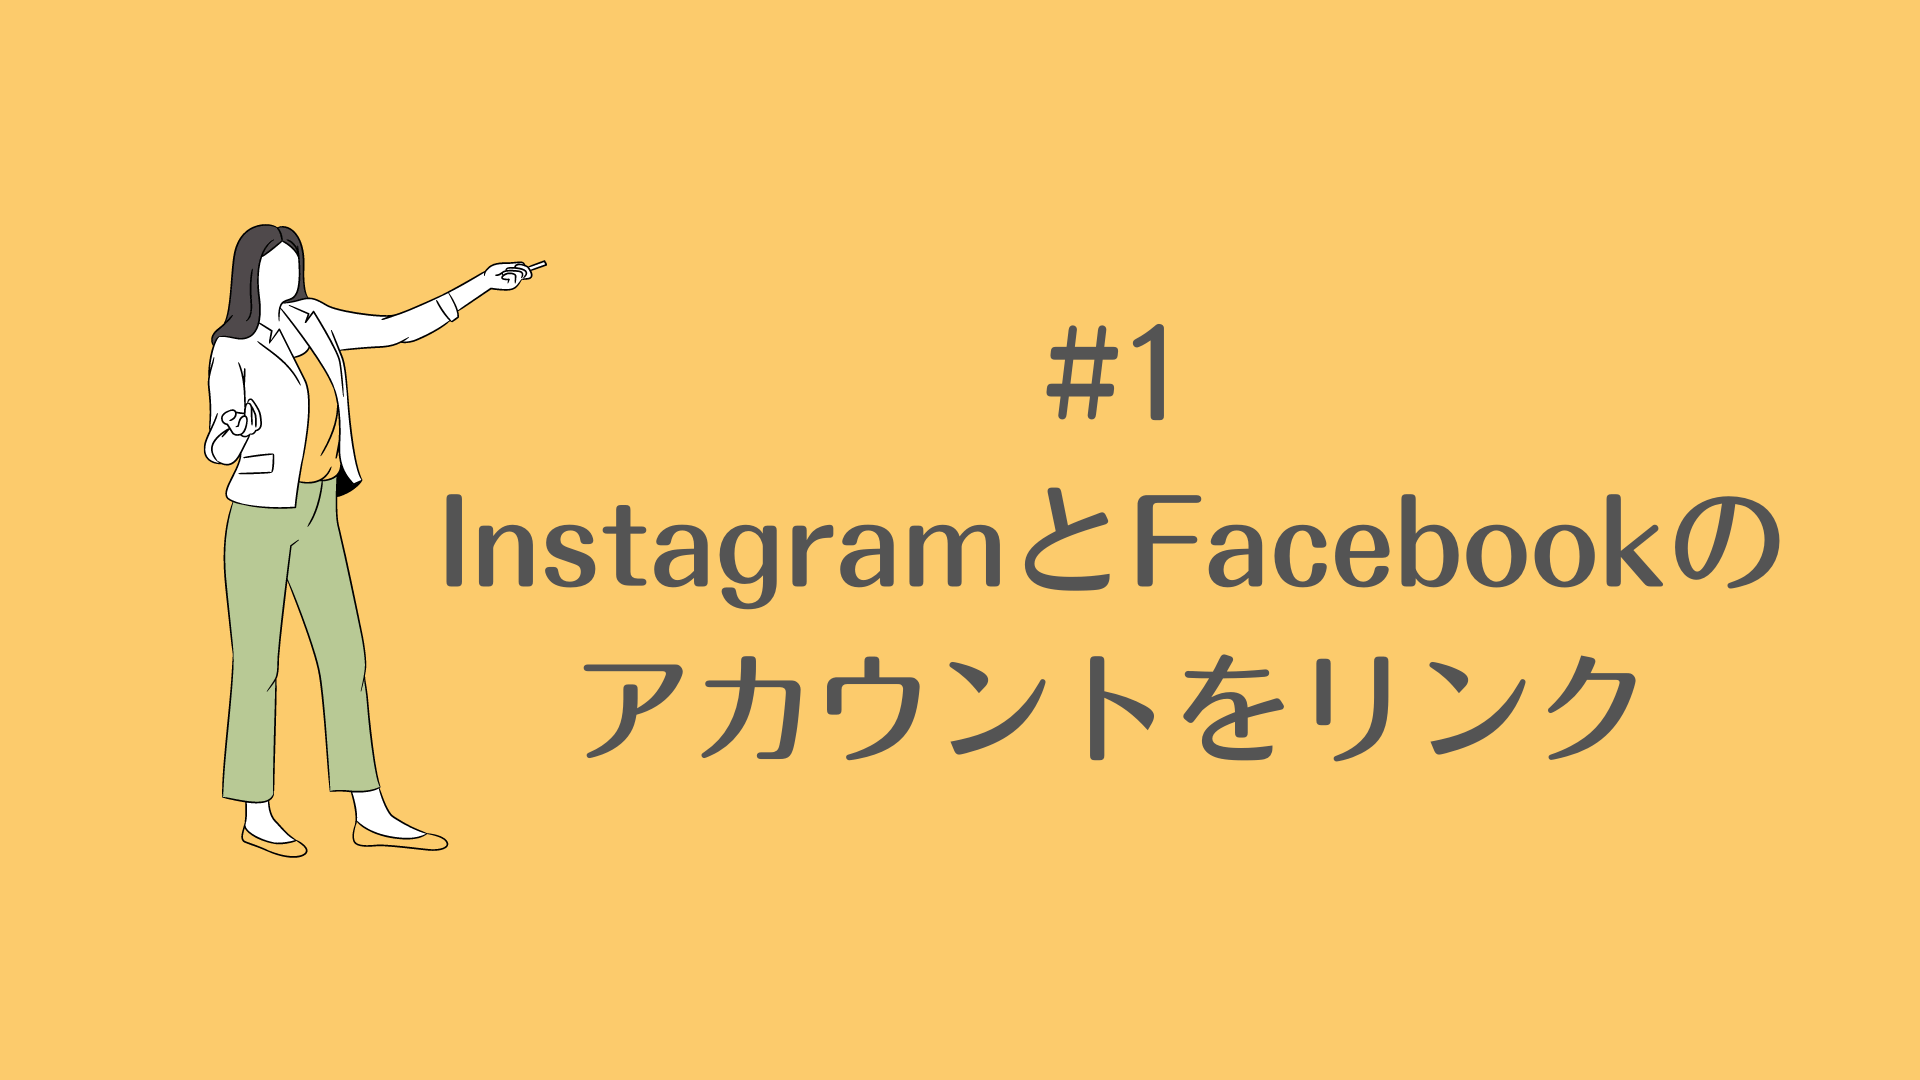 Instagram広告_出し方_Instagram広告の出し方について_InstagramとFacebookのアカウントをリンク